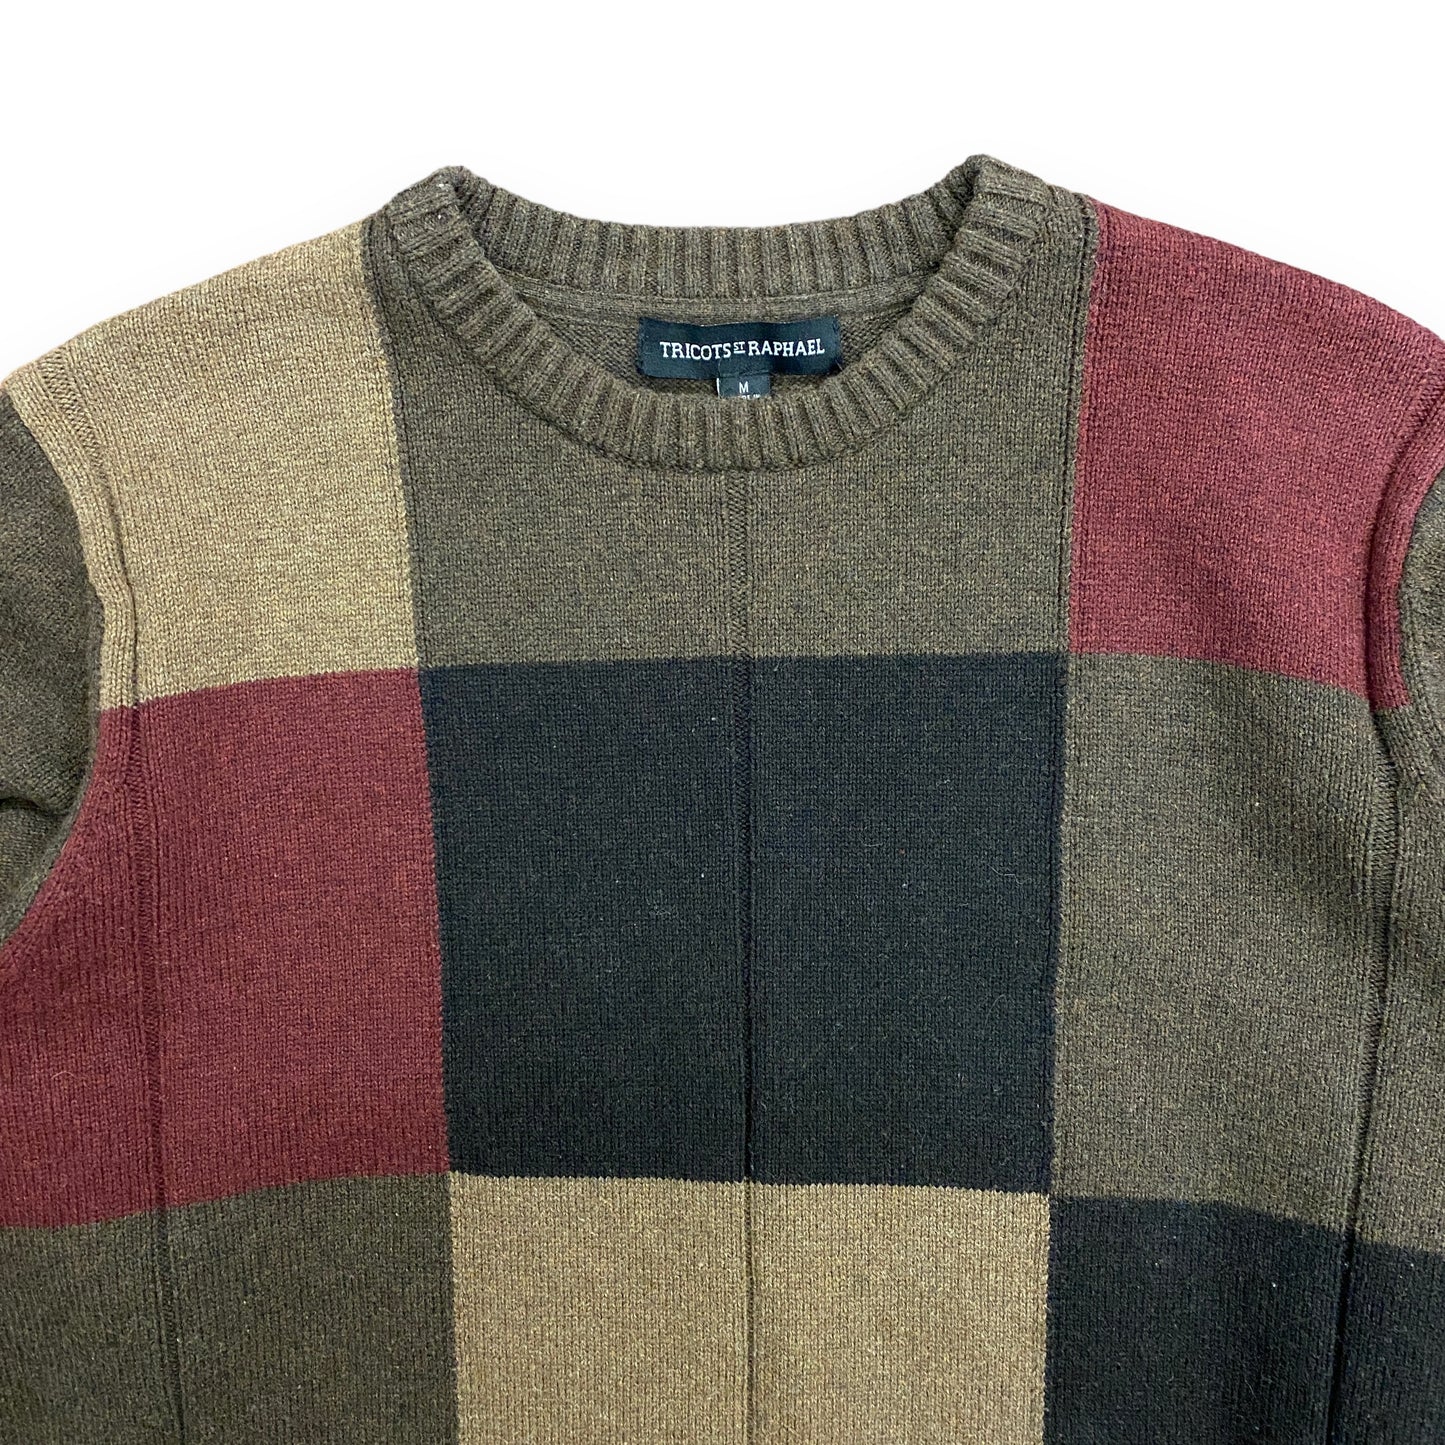 Tricots St. Raphael Brown Knit Sweater - Size Medium